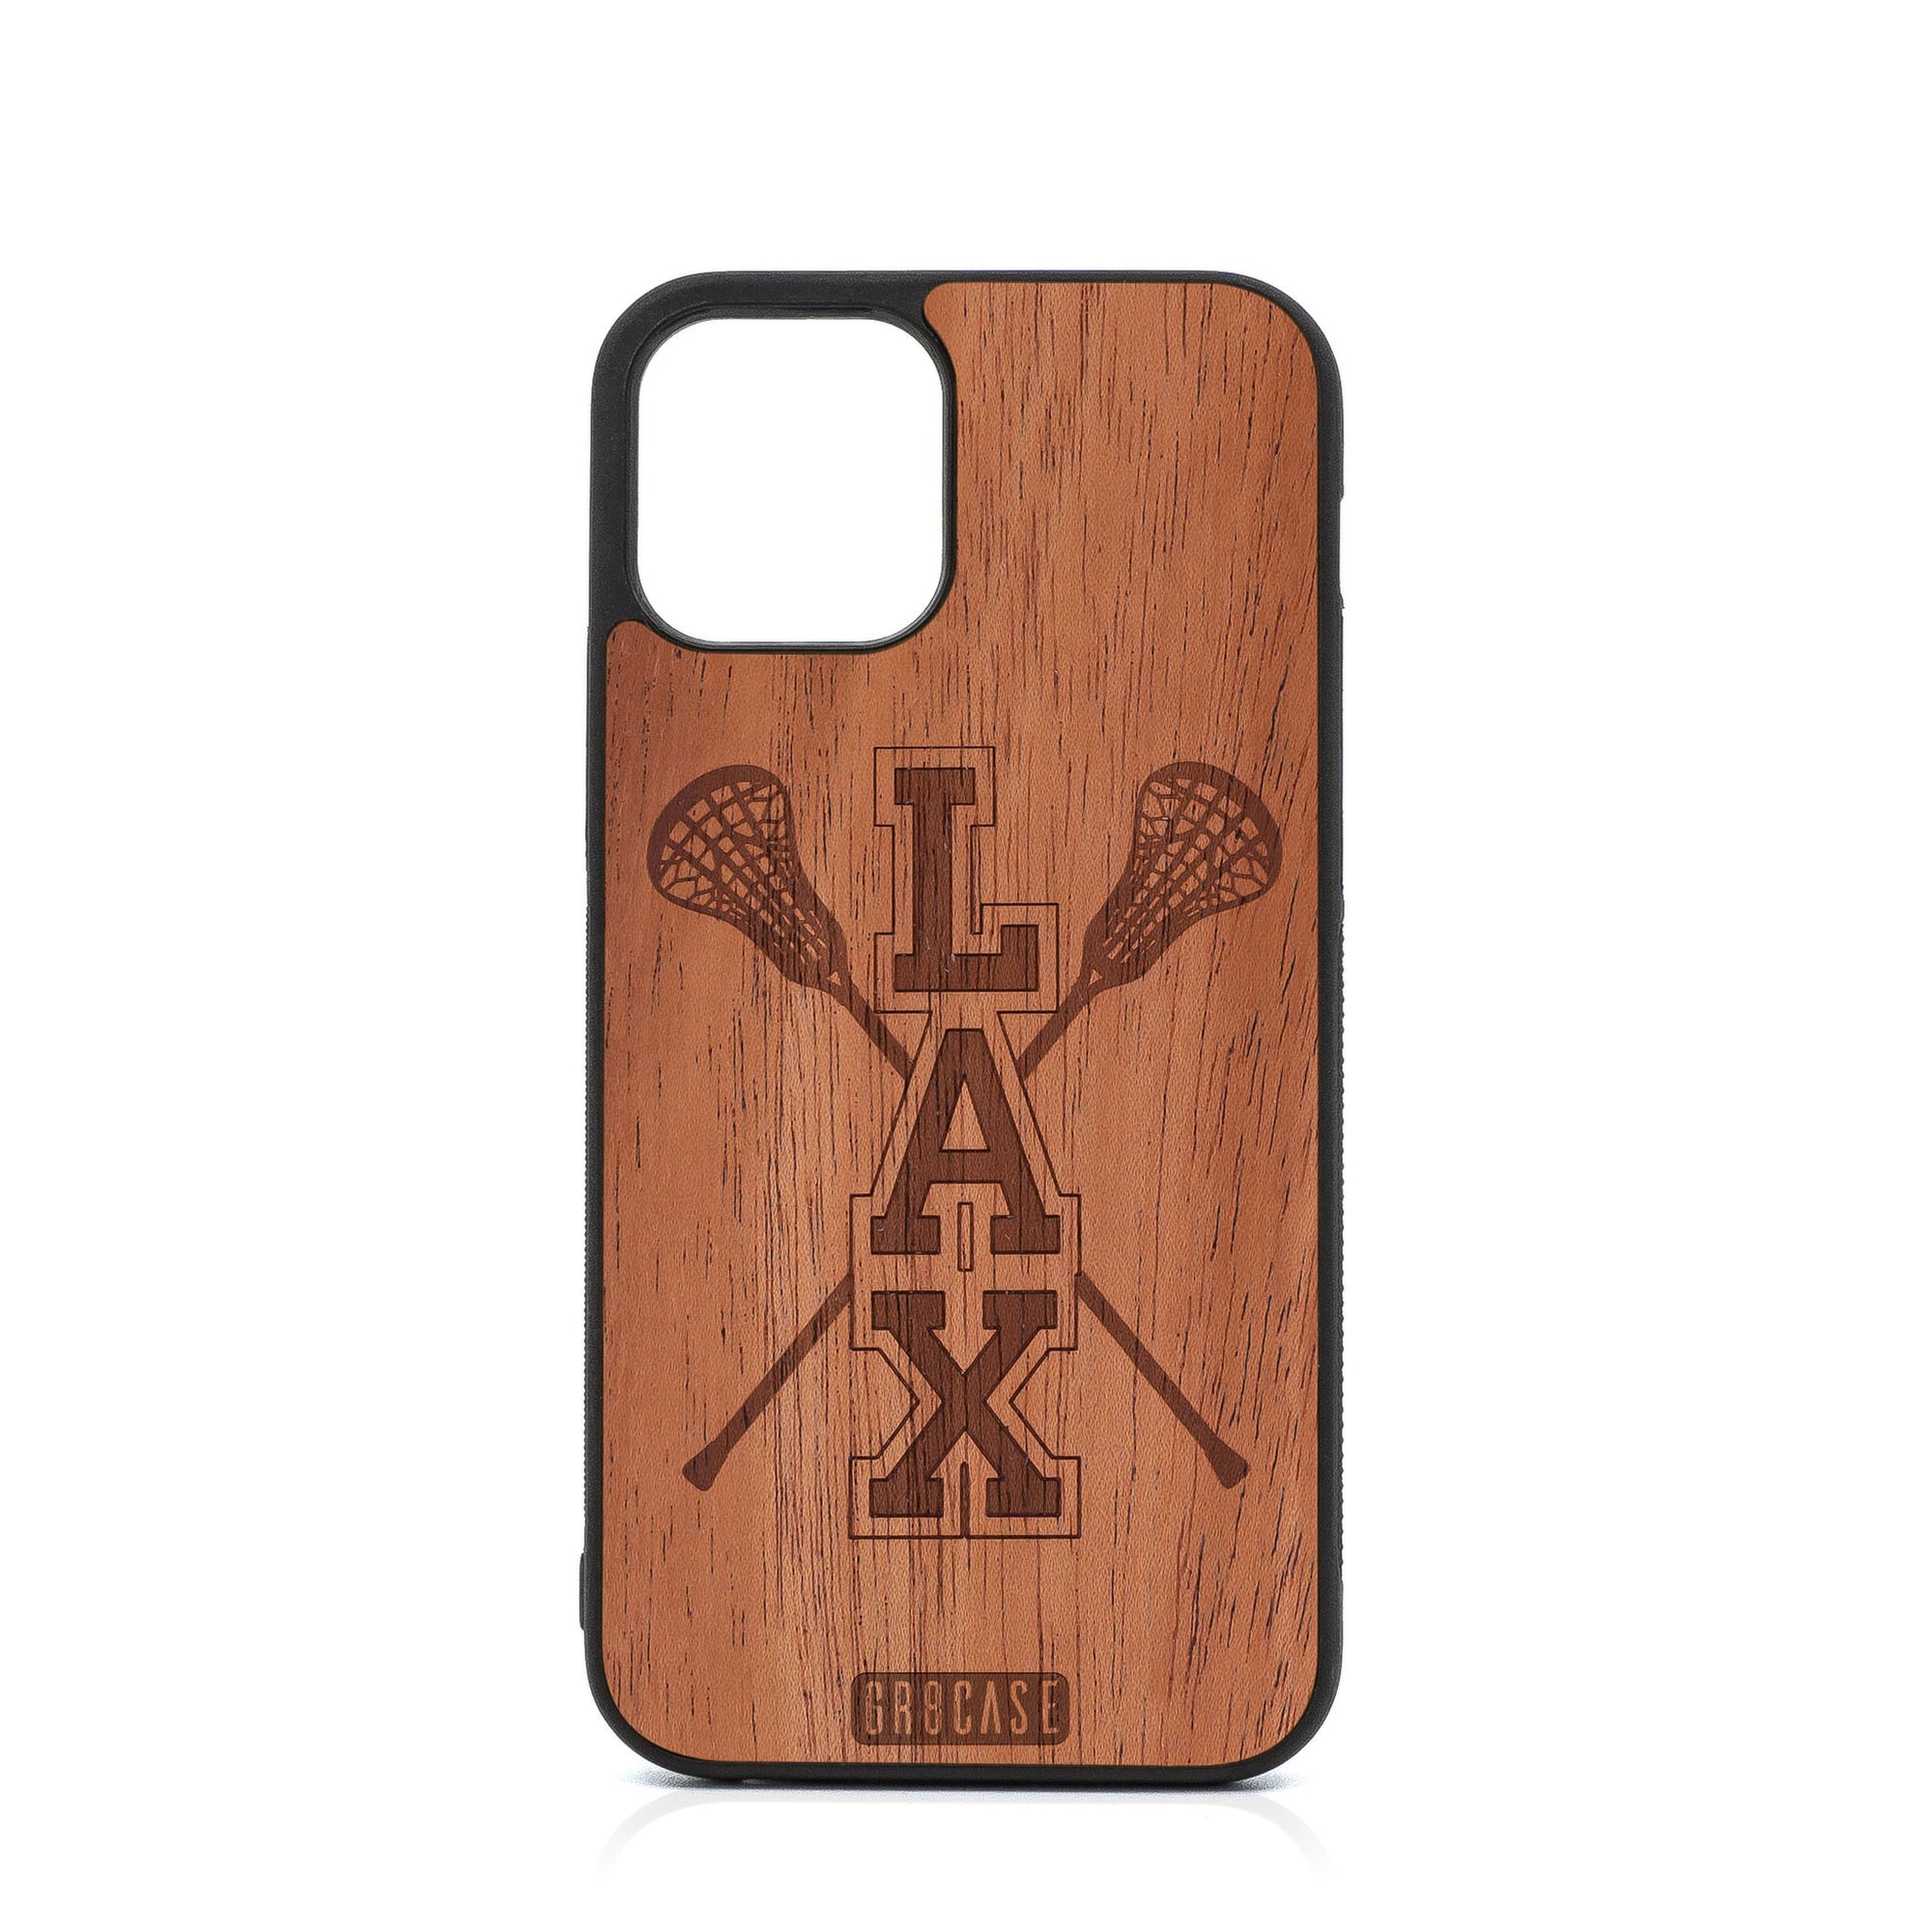 Lacrosse (LAX) Sticks Design Wood Case For iPhone 12